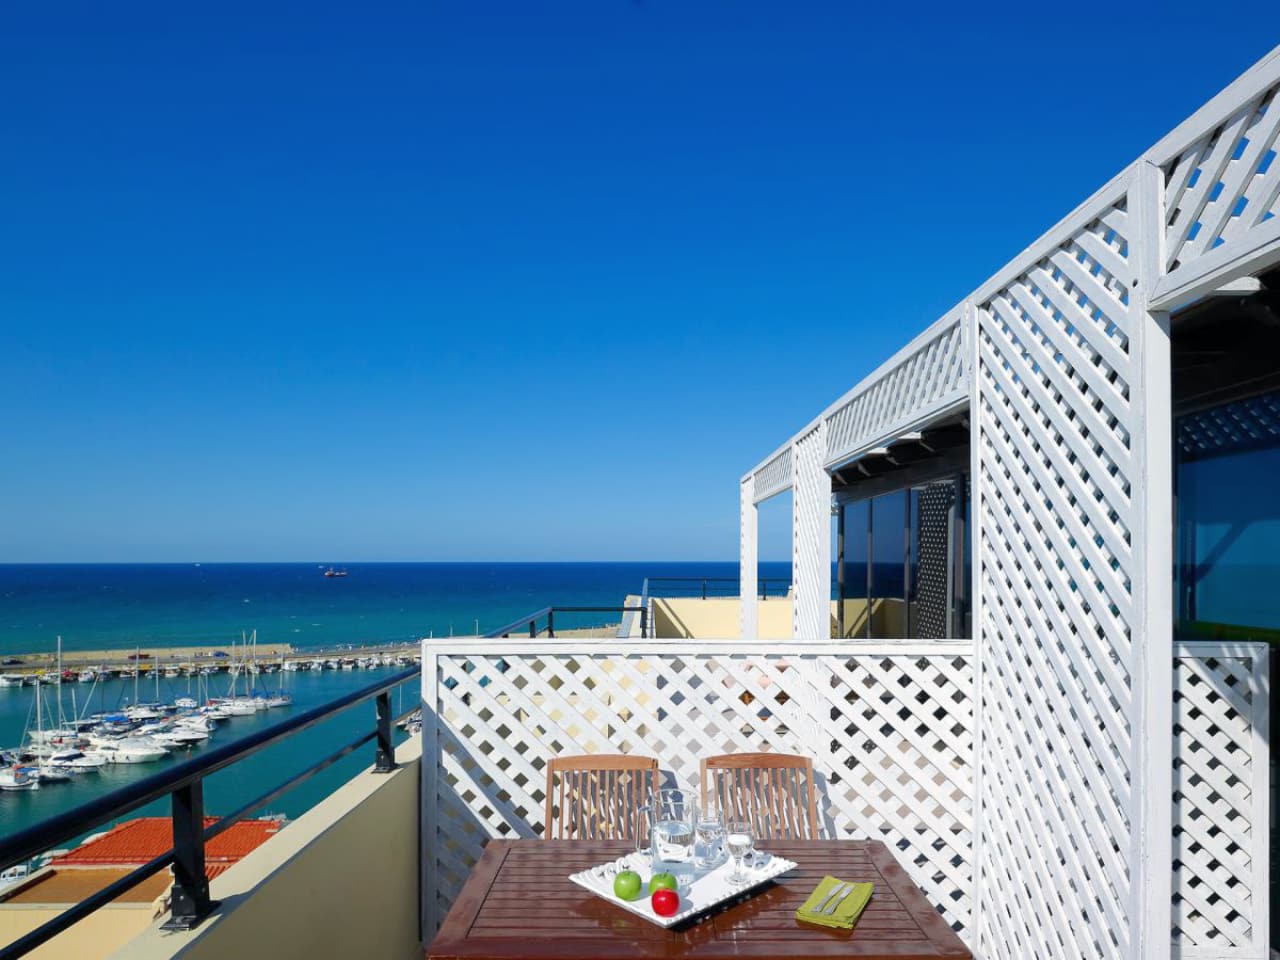 Lato Boutique Hotel In Heraklion Crete Is Officially A 4 Star